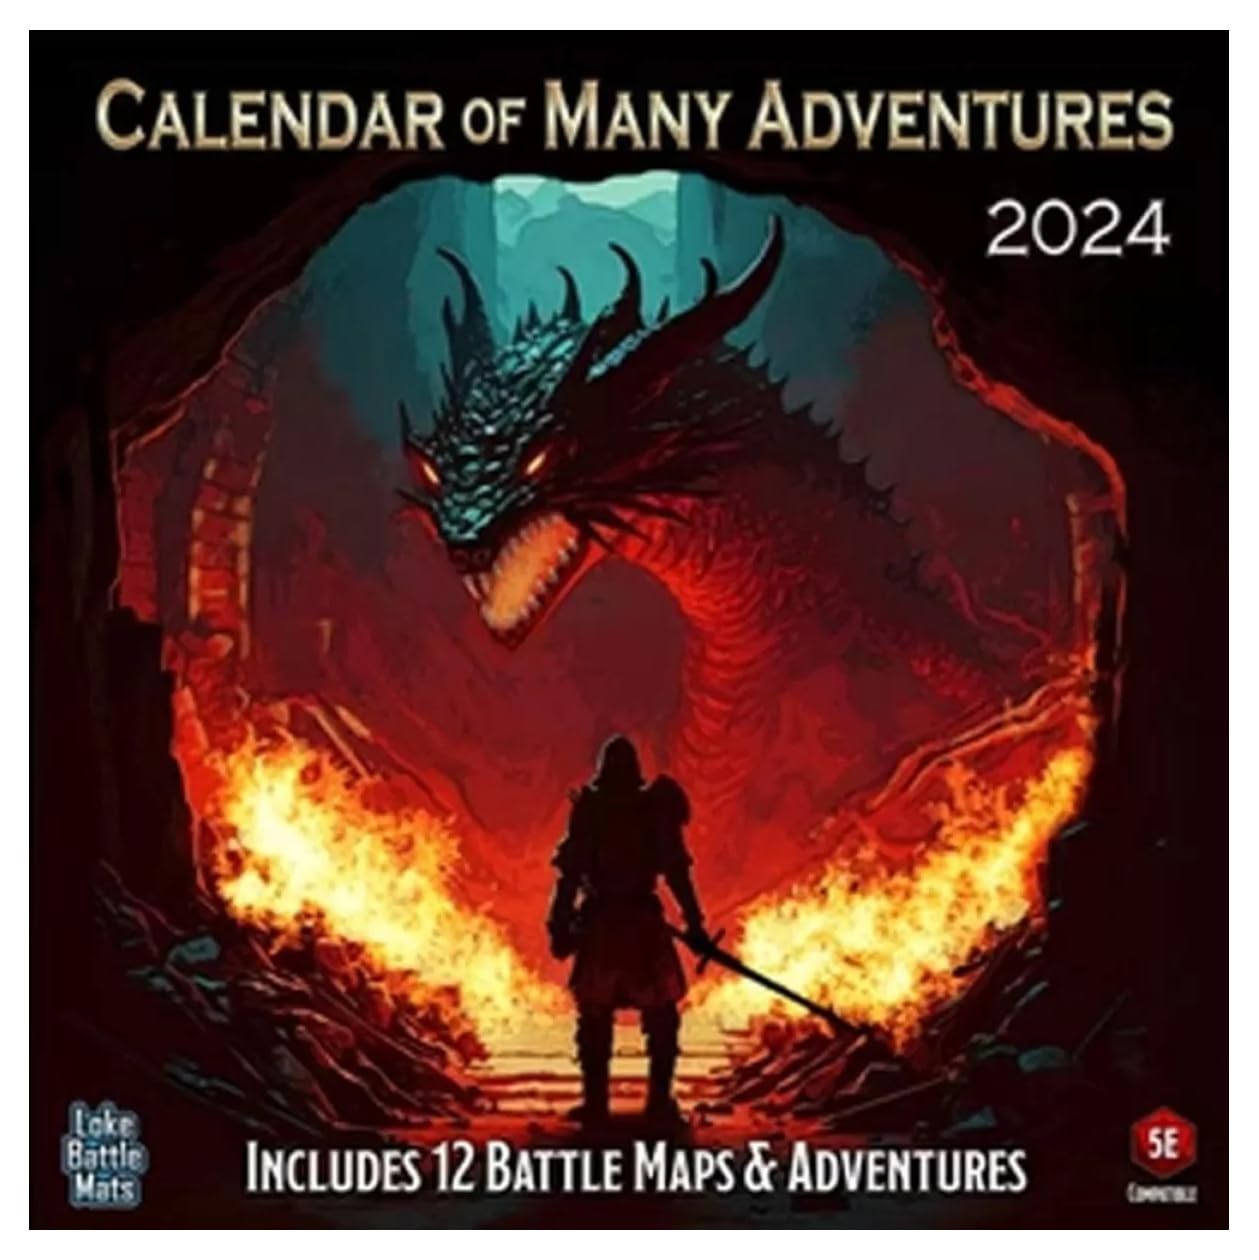 Loke Battle Mats Role Playing Games Loke Battle Mats Calendar of Many Adventures (2024)